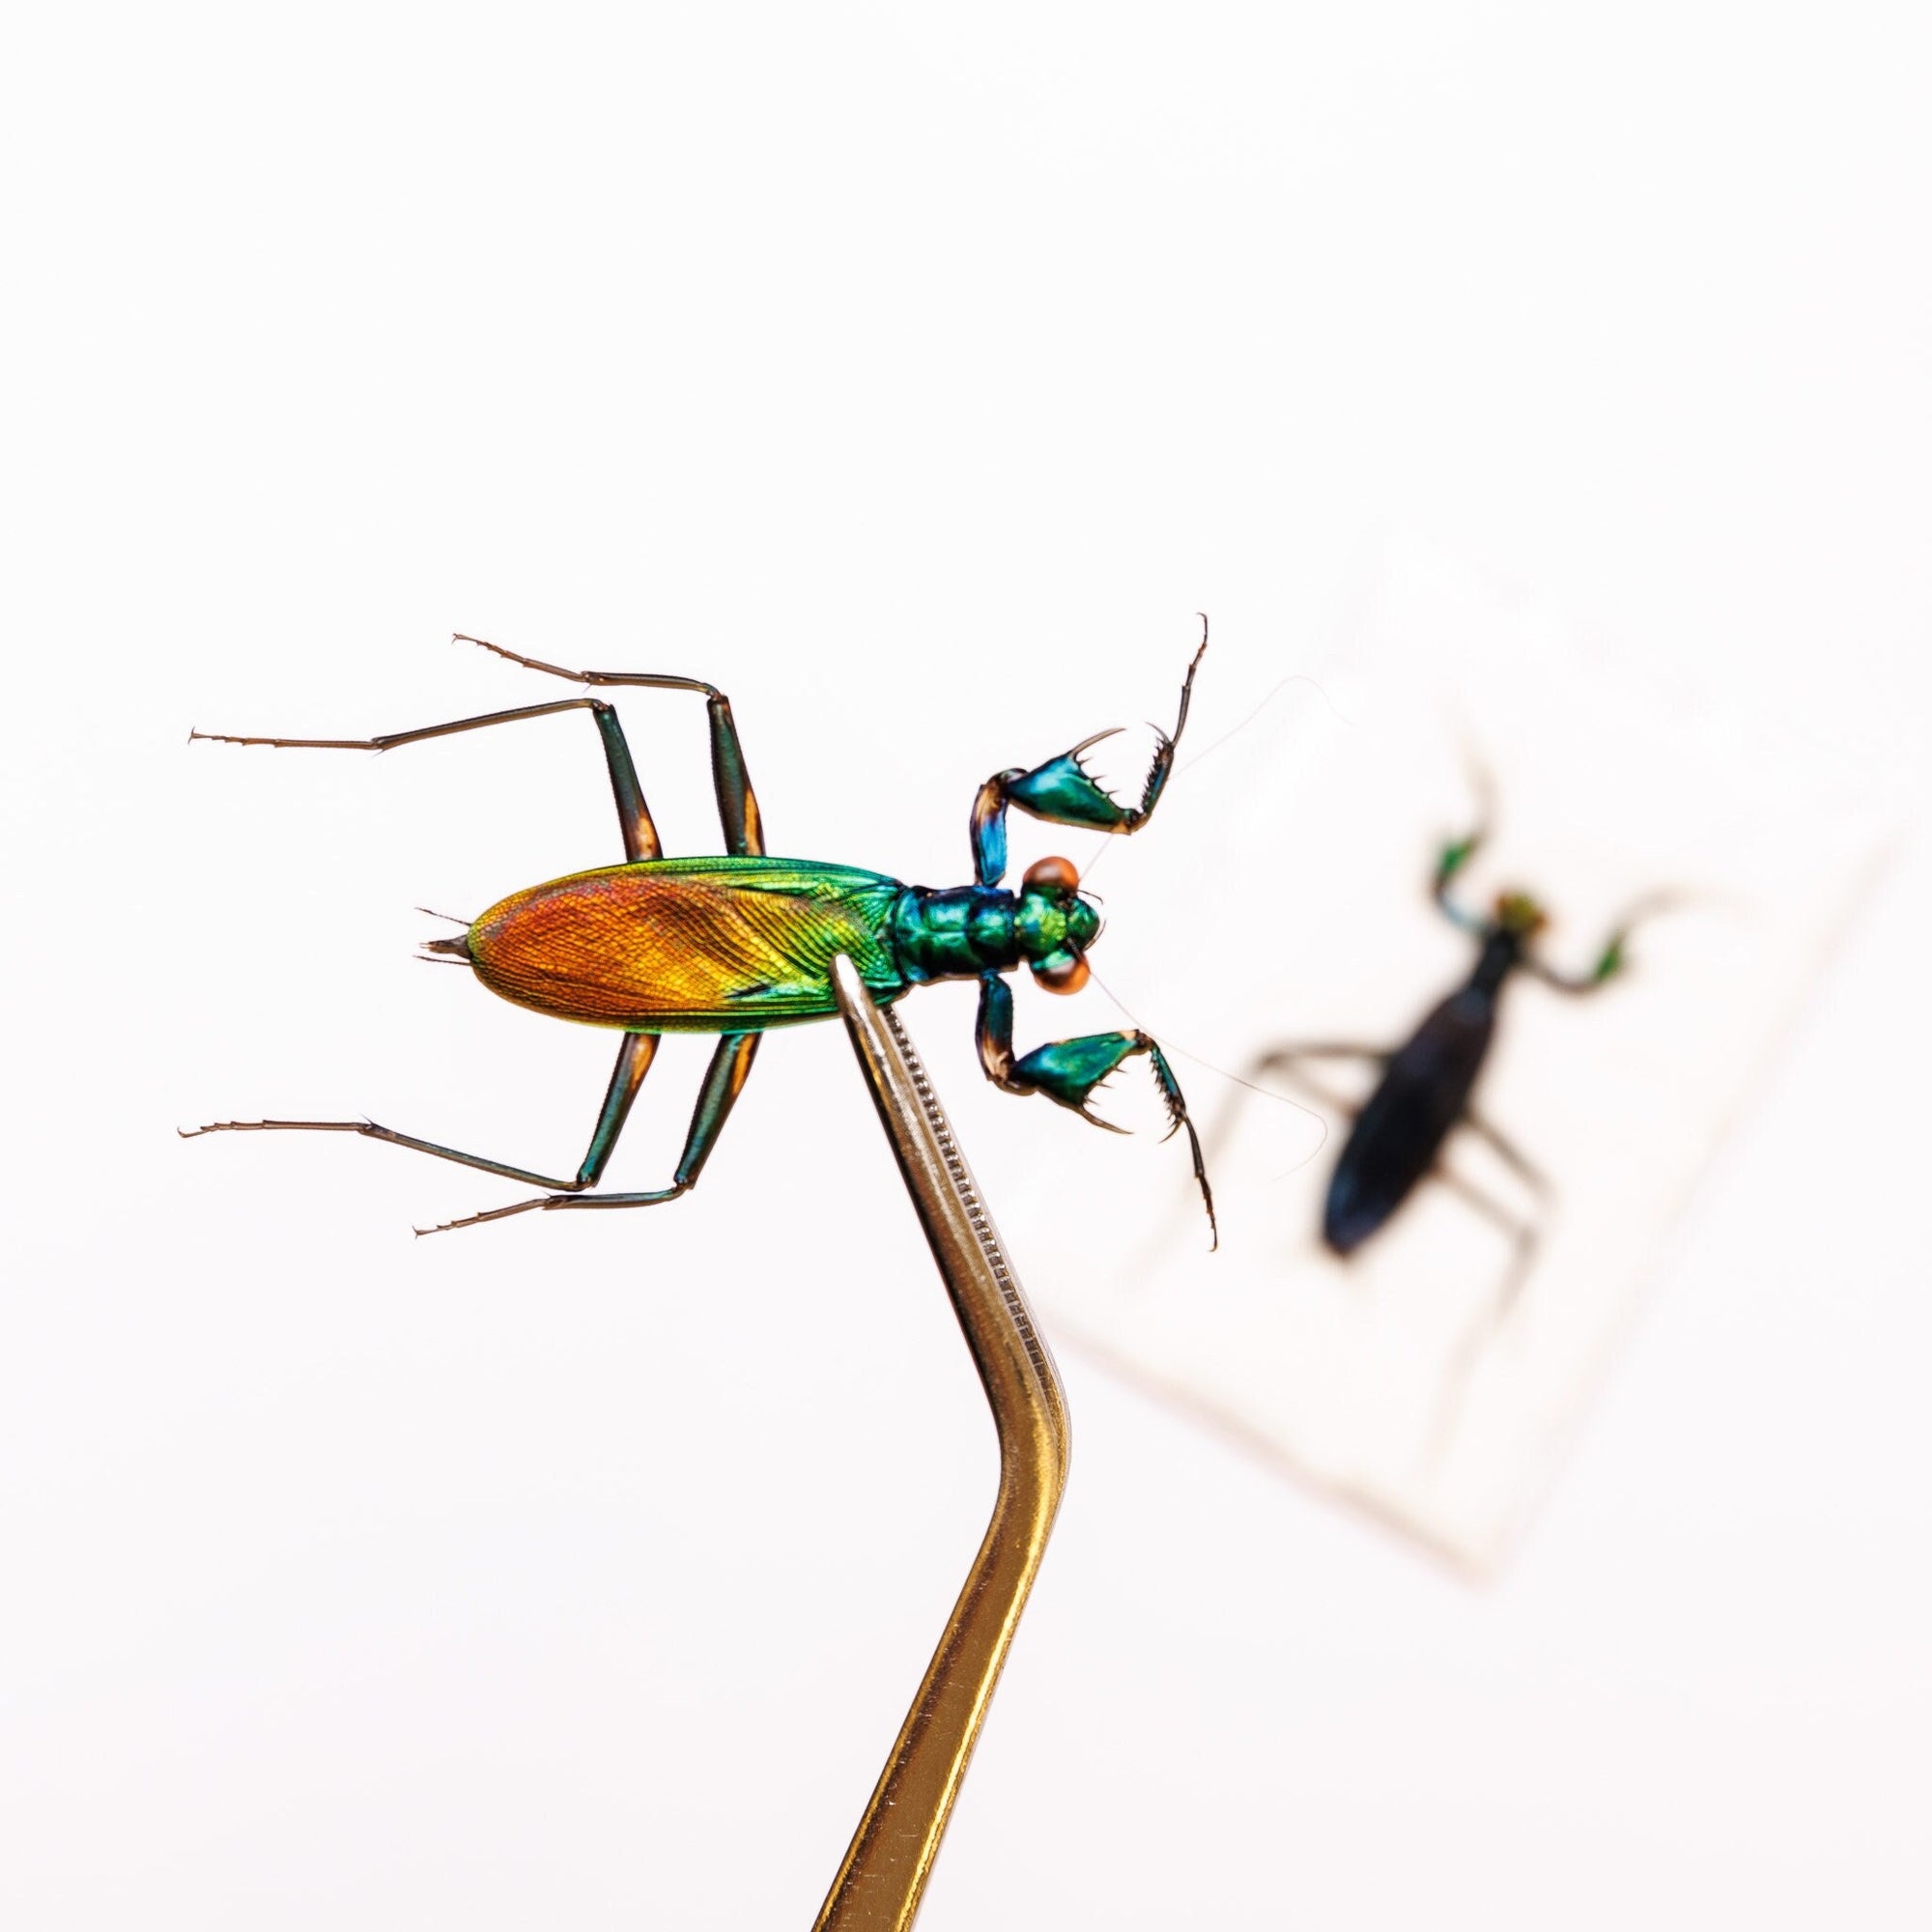 TWO (2) Metallic Praying Mantis SEXED PAIR (Metallyticus splendidus) A1 Insect Specimens for Framing